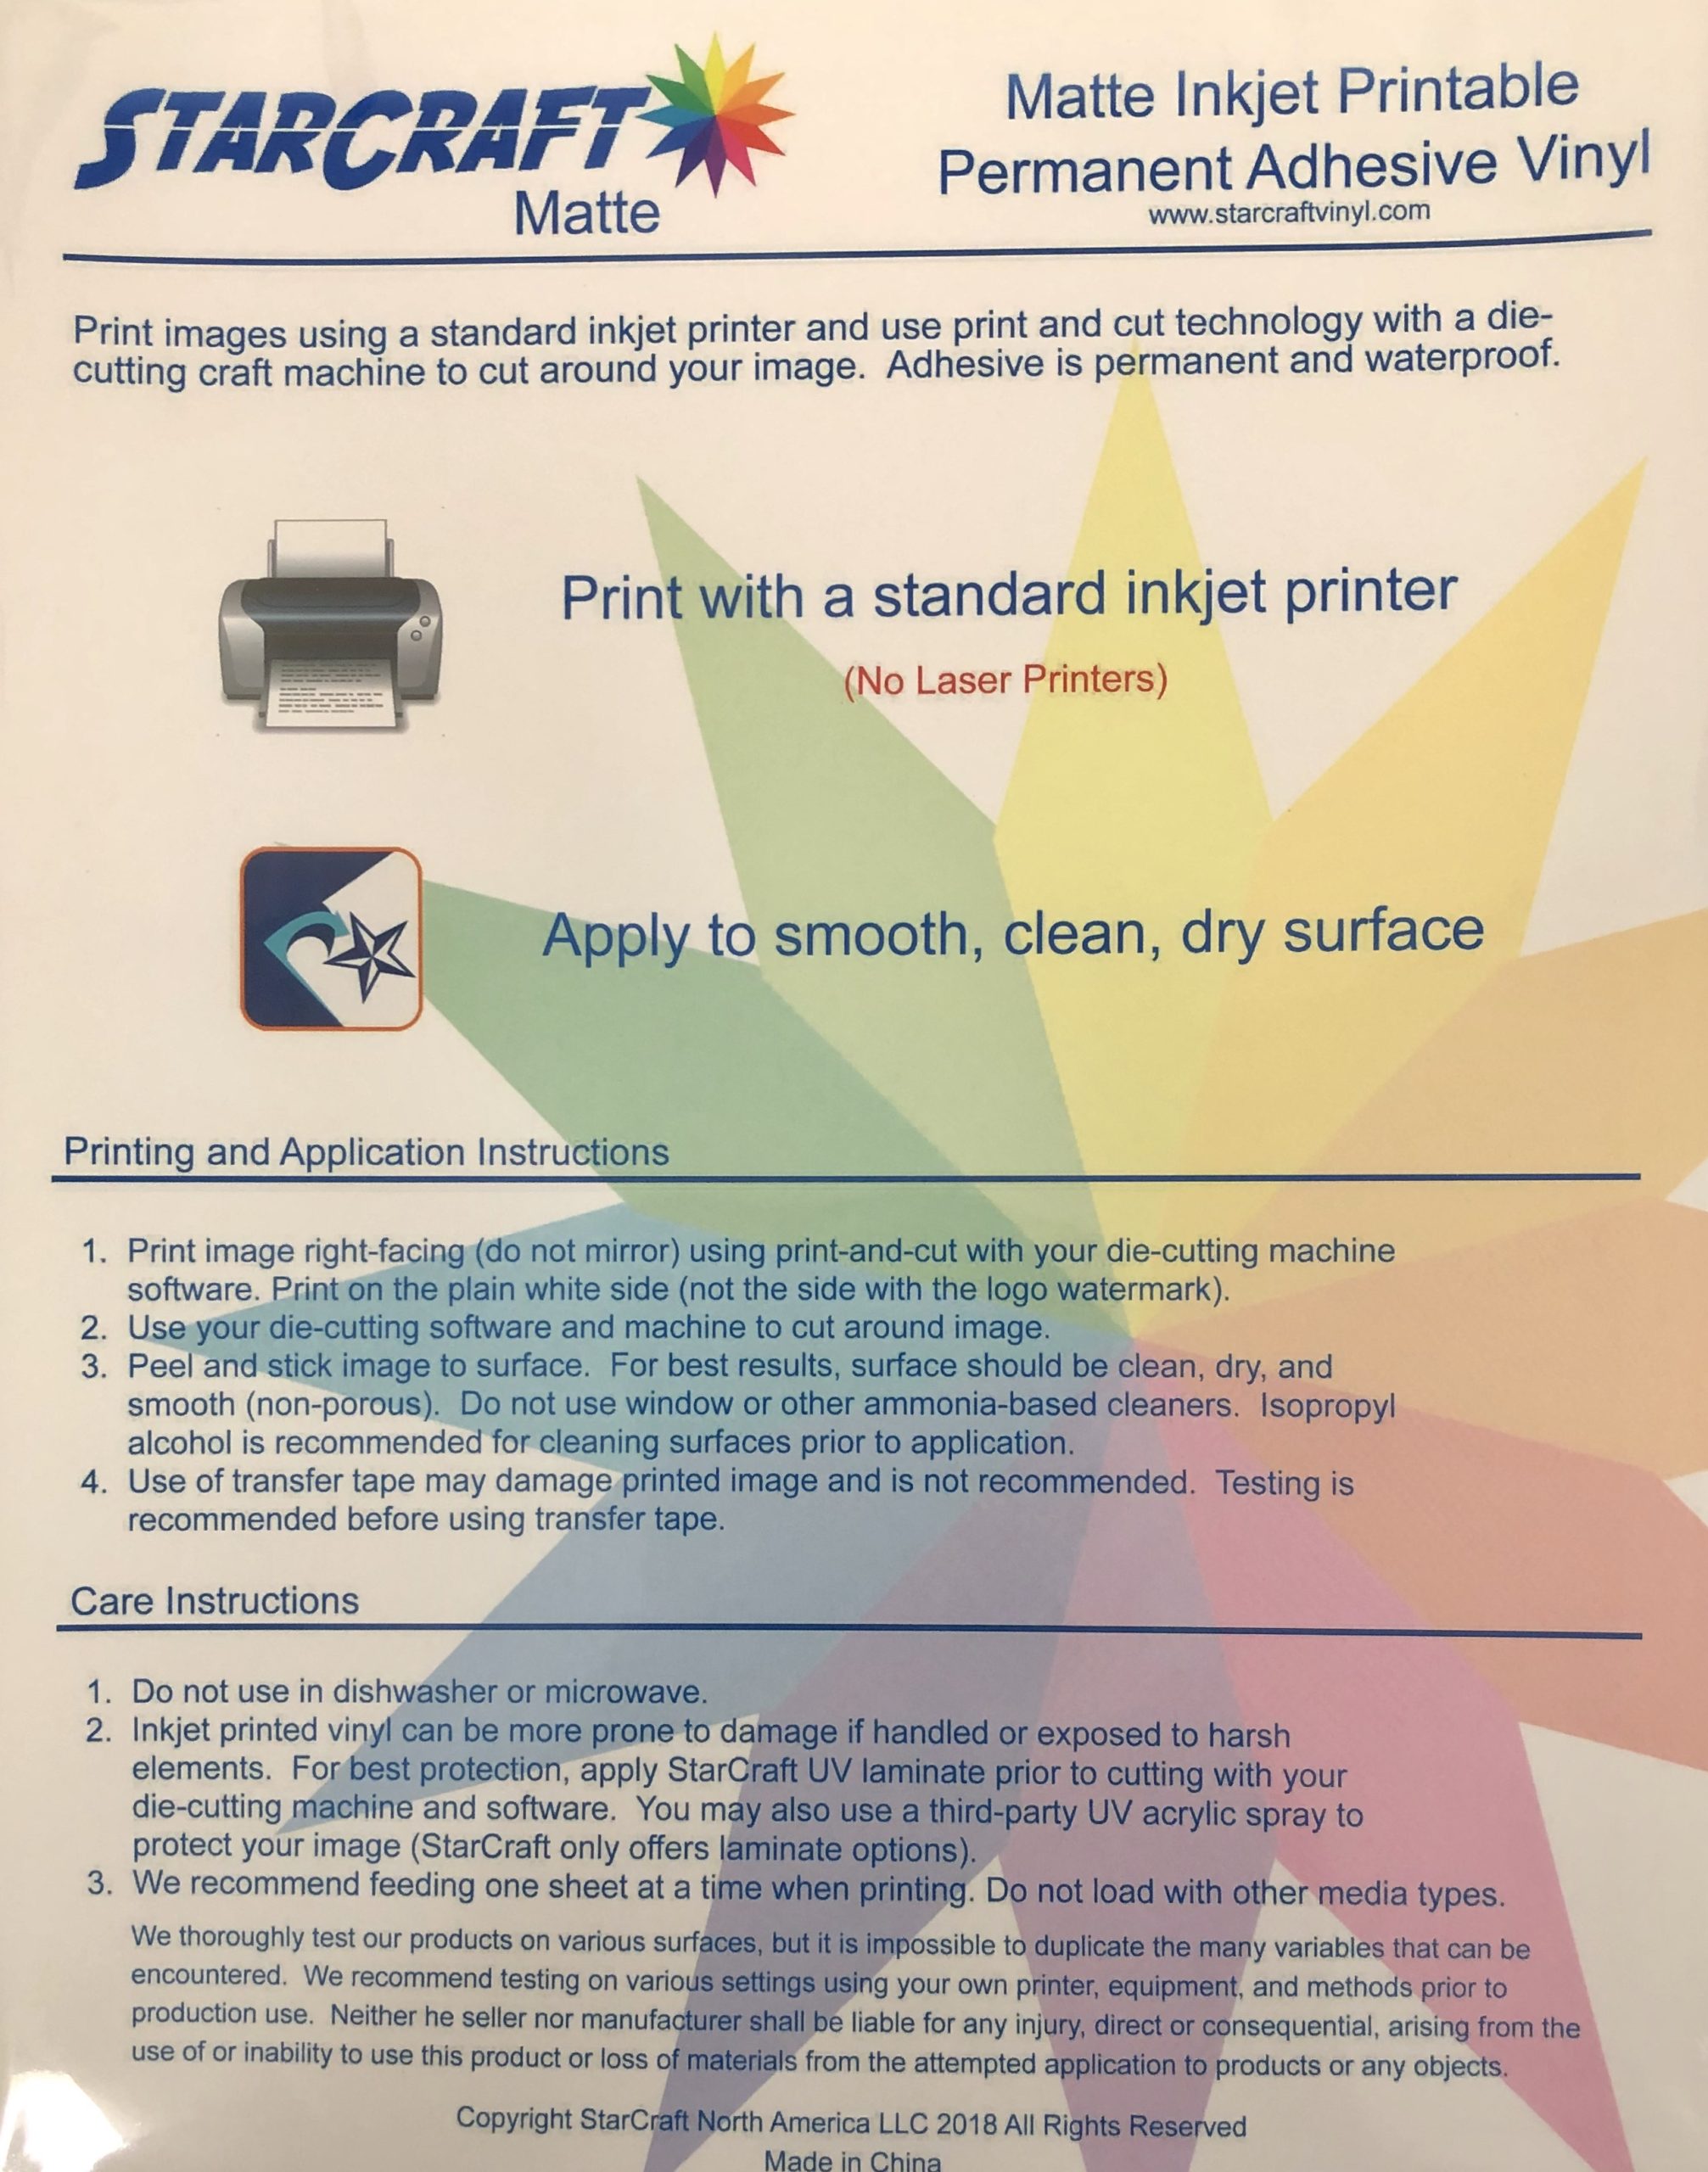 StarCraft Matte Inkjet Printable Permanent Adhesive Vinyl Central